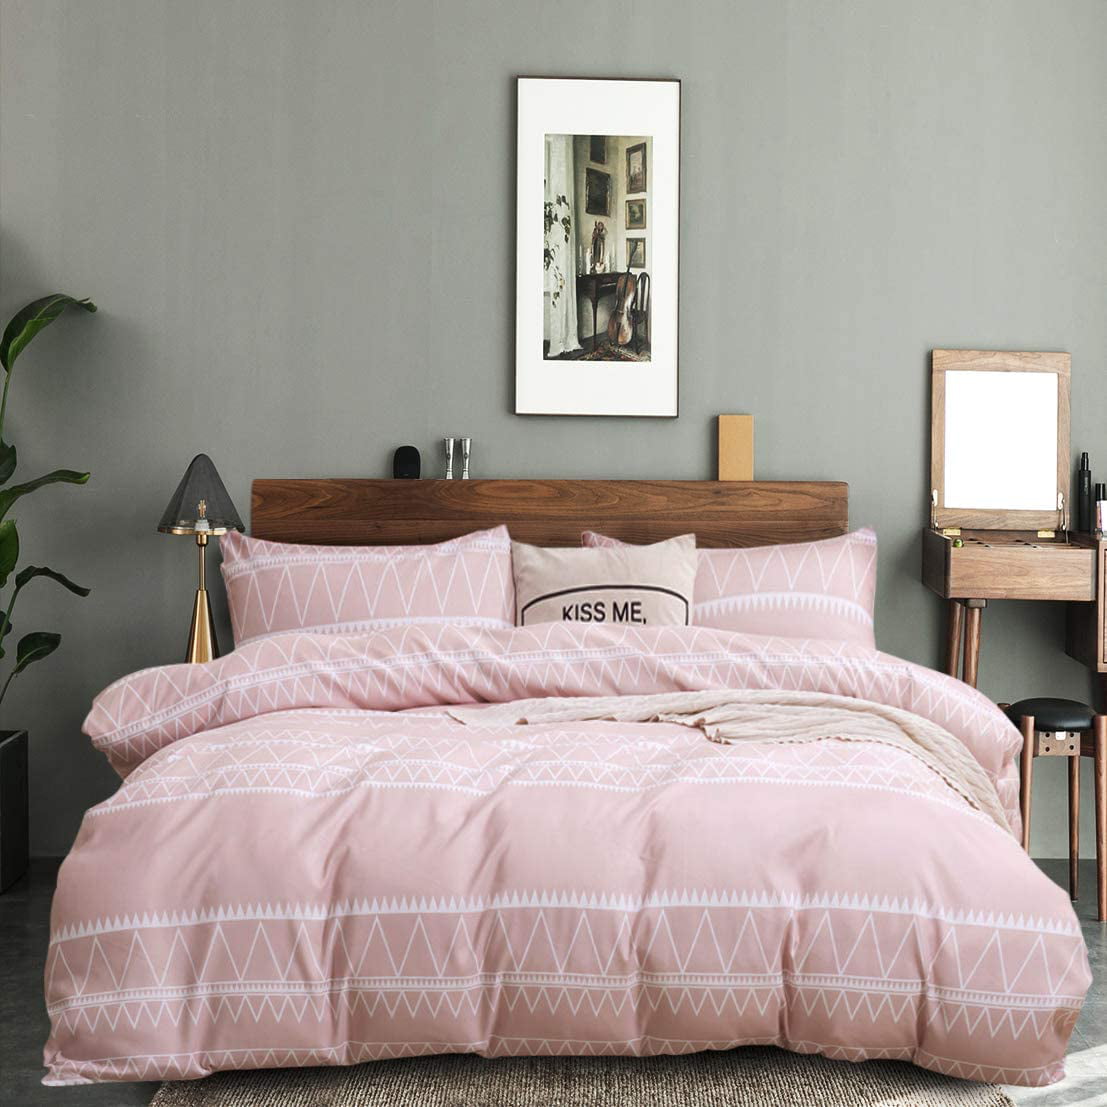 Soft Pink Comforter Cover King Size, Pink Duvet Cover King